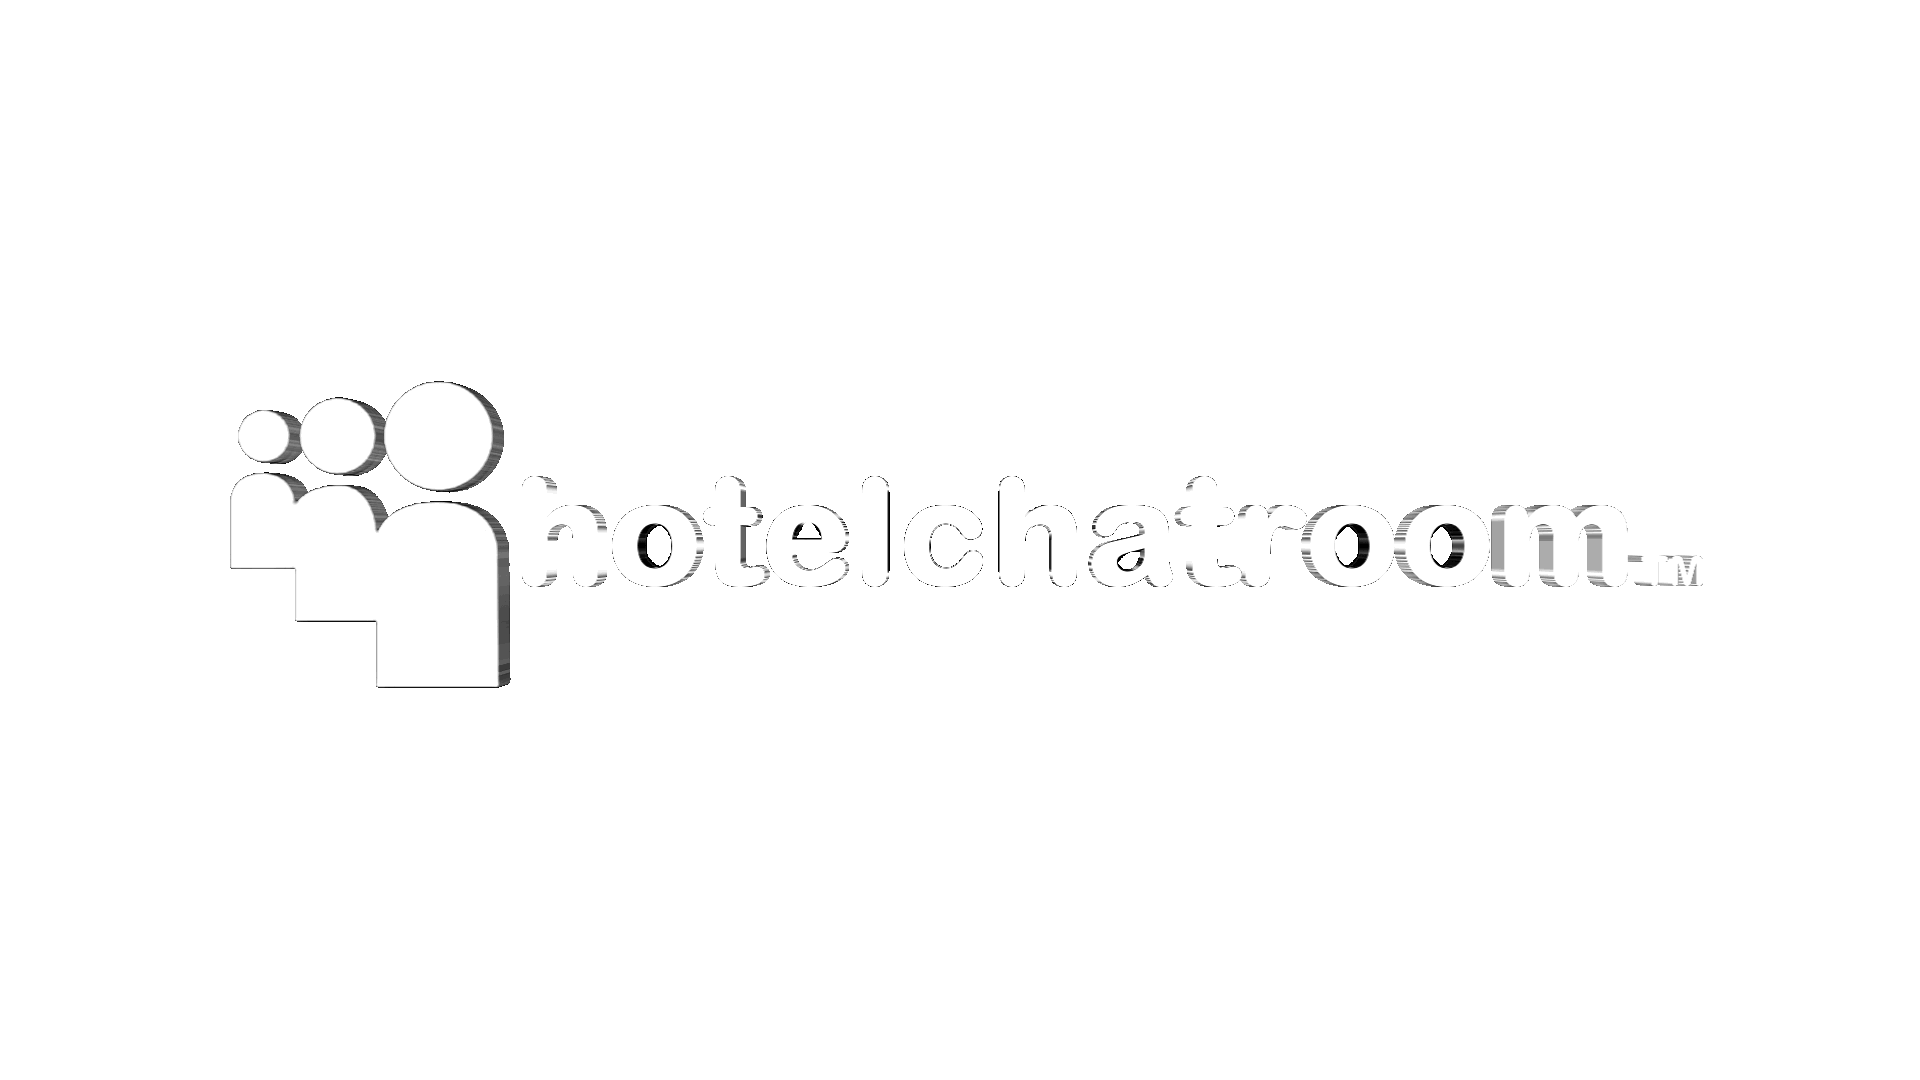 hotel chat room logo